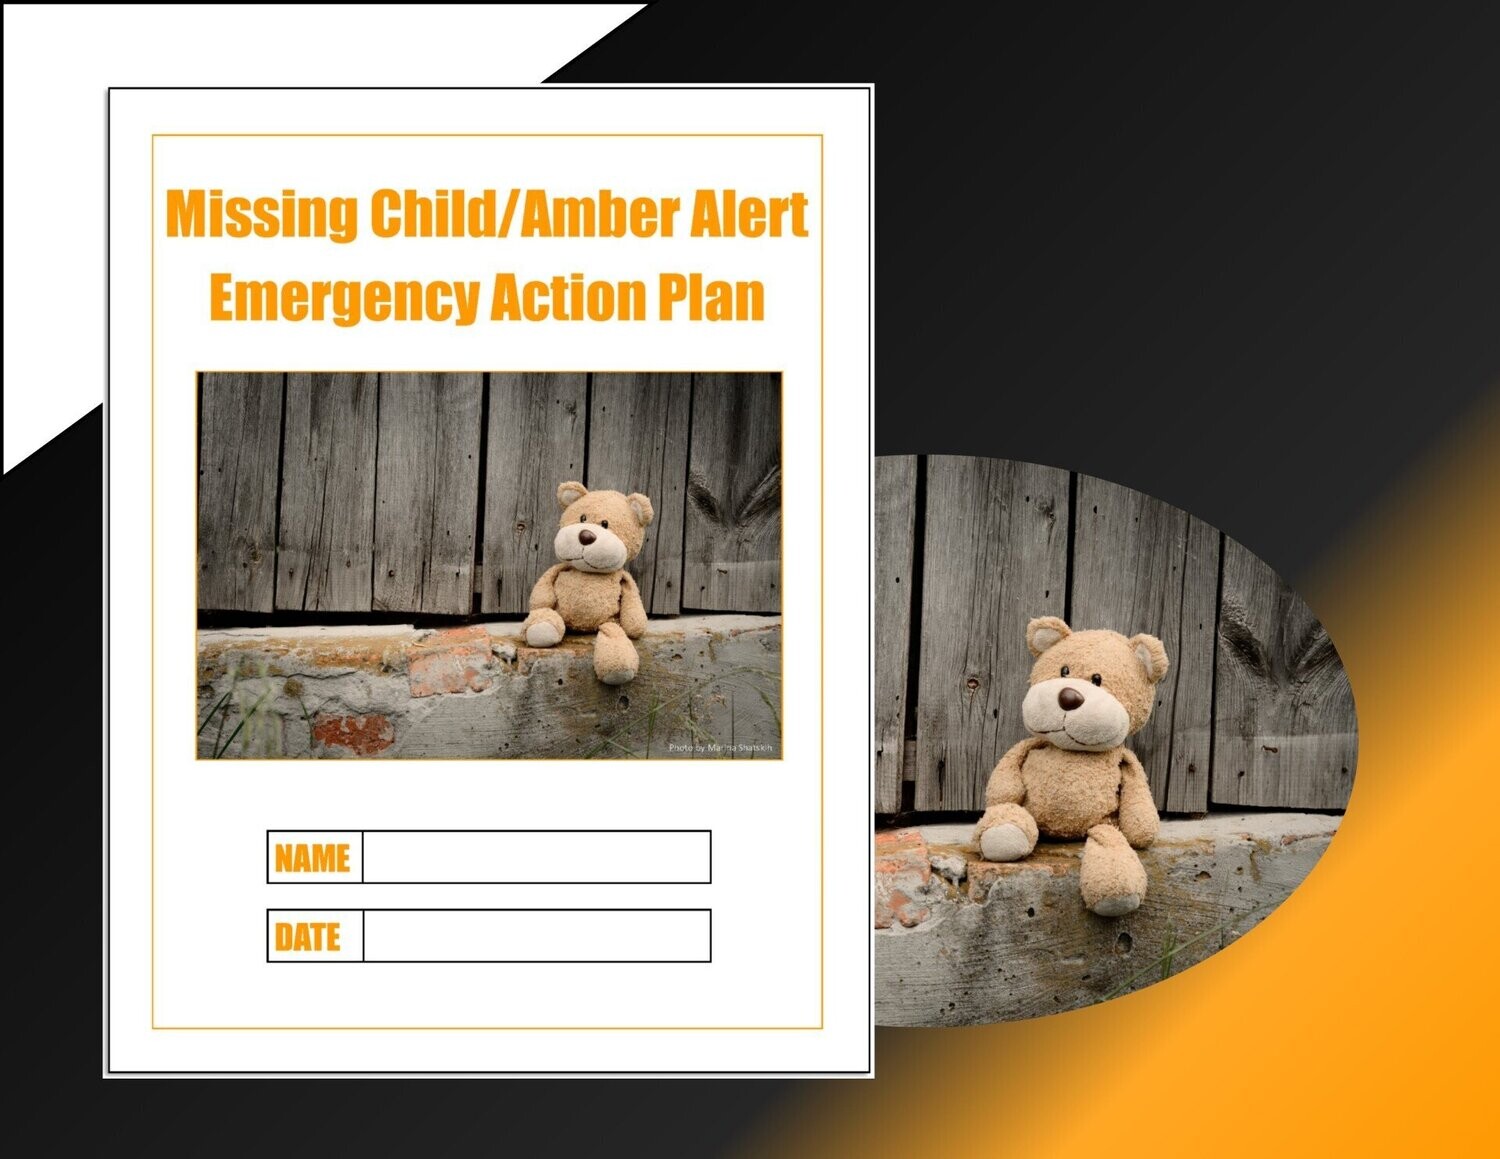 Missing Child/Amber Alert Emergency Action Plan